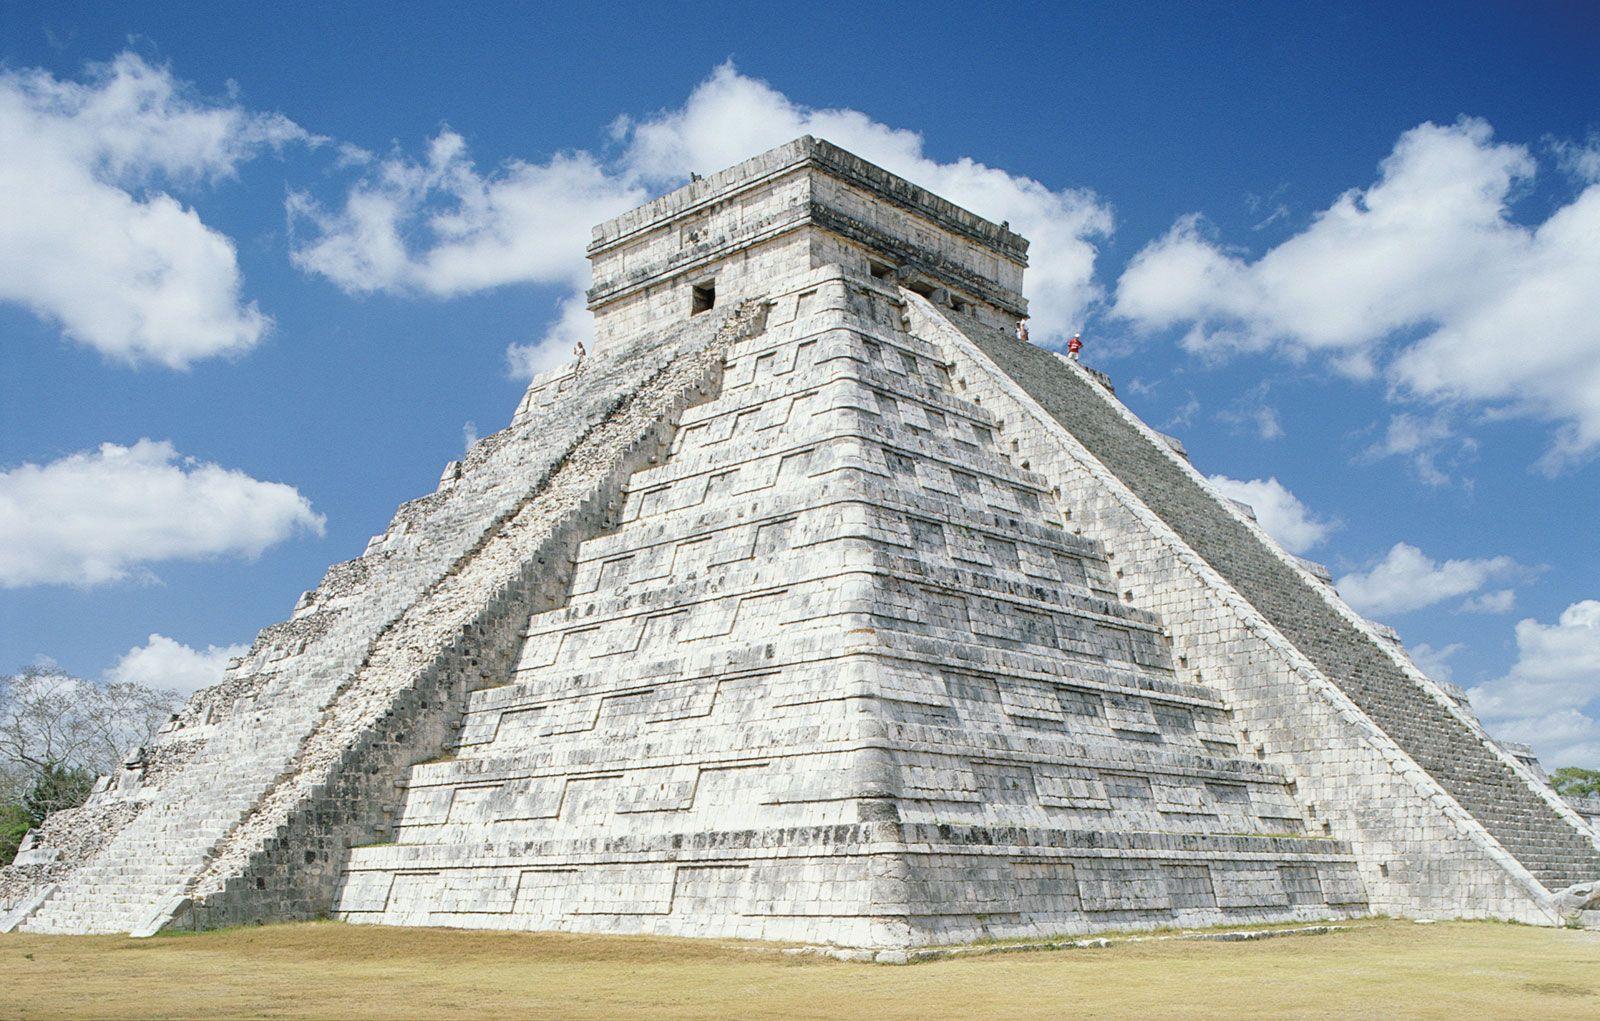 Visitor For Travel: Amazing Mexico pyramids Kukulkan chichen itza